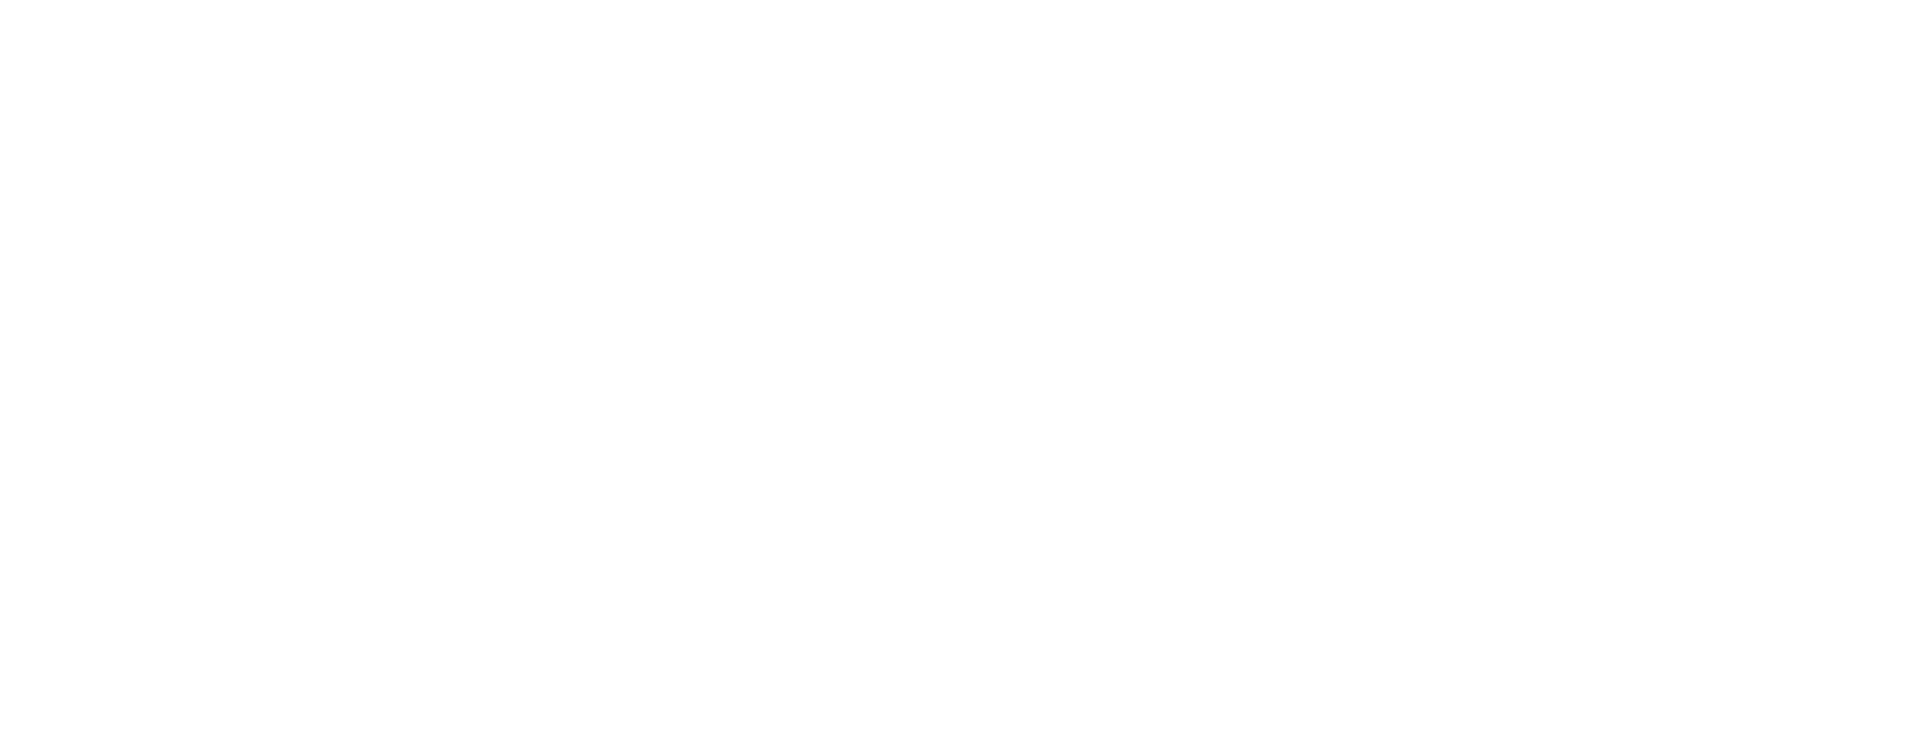 effie-europe_awards-logo-white